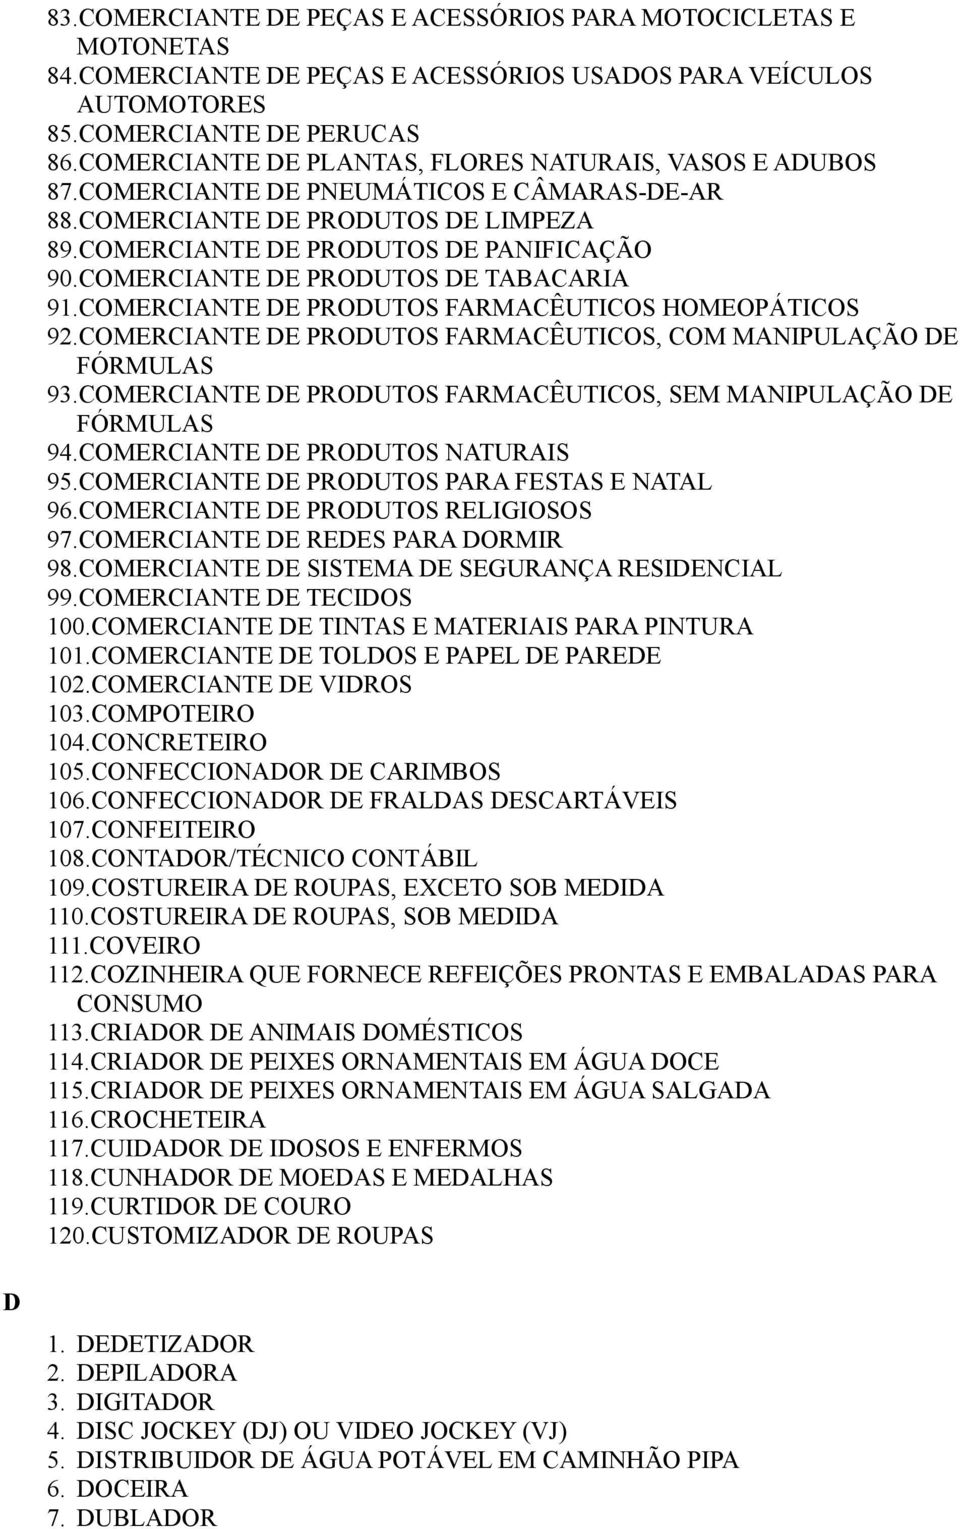 COMERCIANTE DE PRODUTOS DE TABACARIA 91.COMERCIANTE DE PRODUTOS FARMACÊUTICOS HOMEOPÁTICOS 92.COMERCIANTE DE PRODUTOS FARMACÊUTICOS, COM MANIPULAÇÃO DE FÓRMULAS 93.